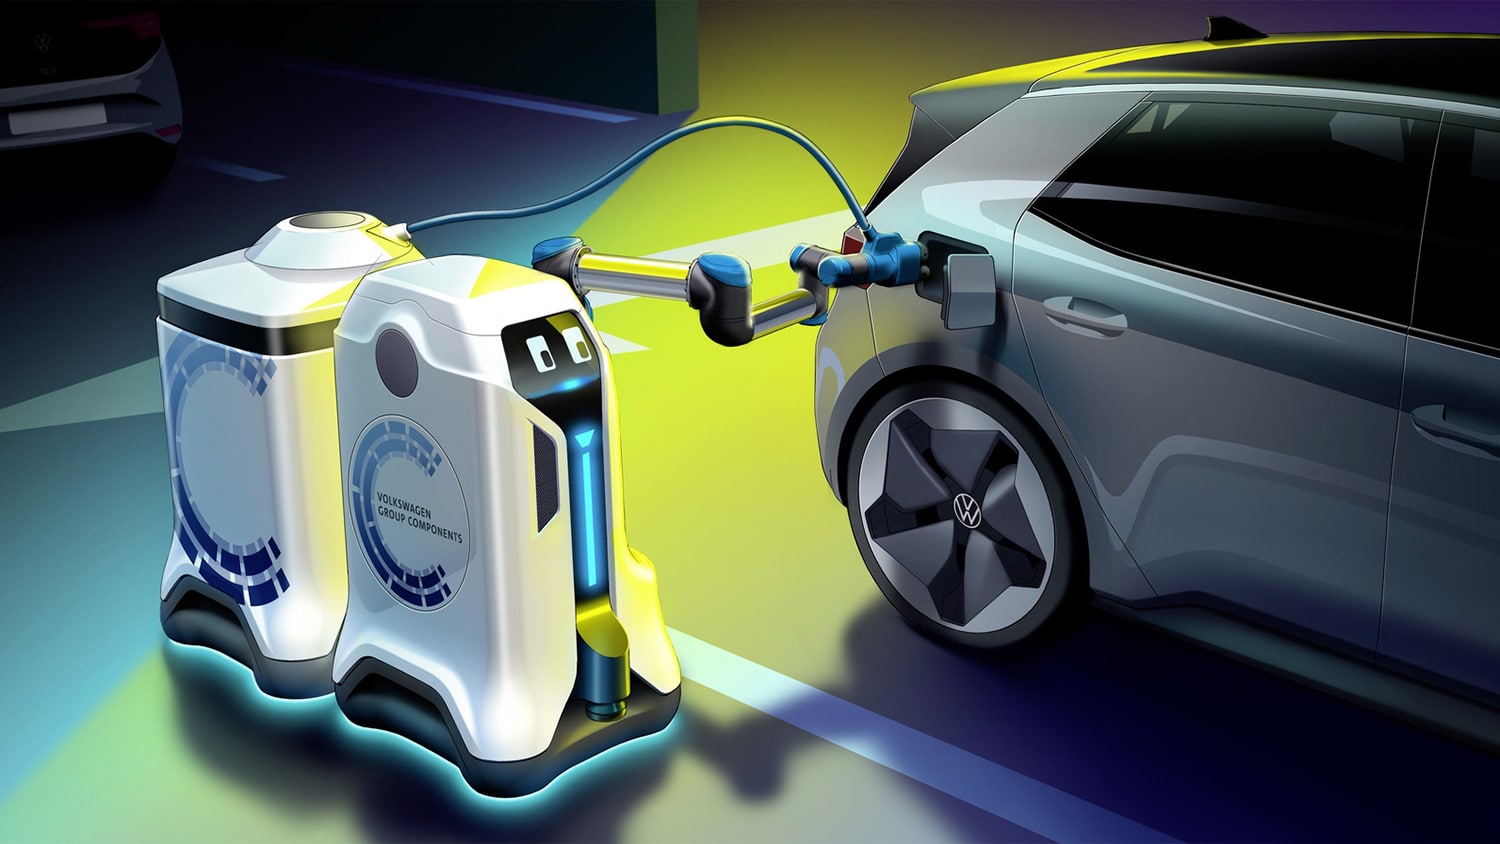 VW’s mobile charging robot recharges electric cars autonomously